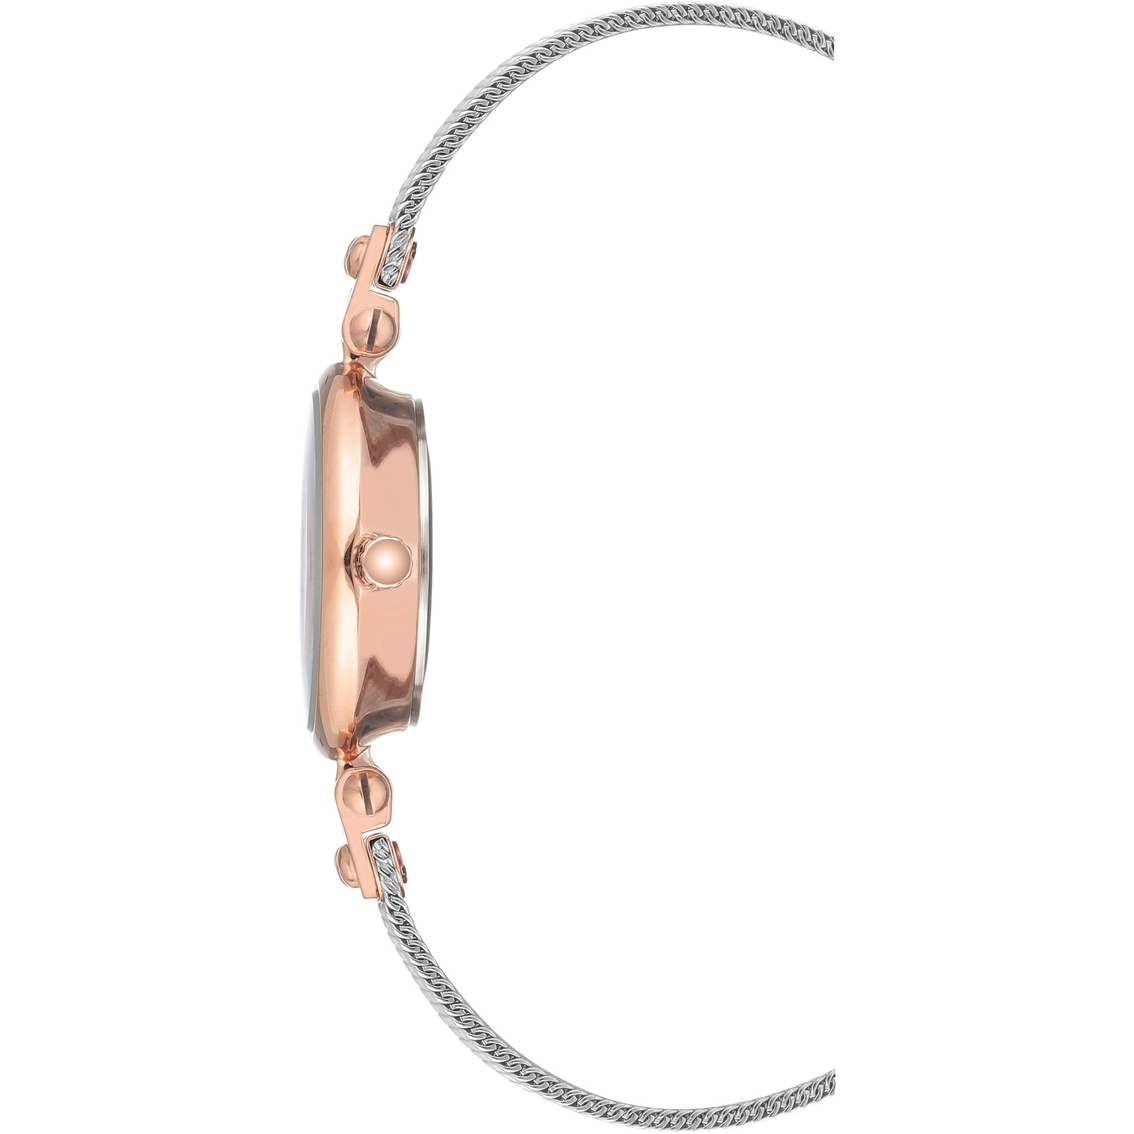 Anne Klein Women's Diamond Accented Two-tone Mesh Bracelet Watch AK/3003SVRT - Image 3 of 3